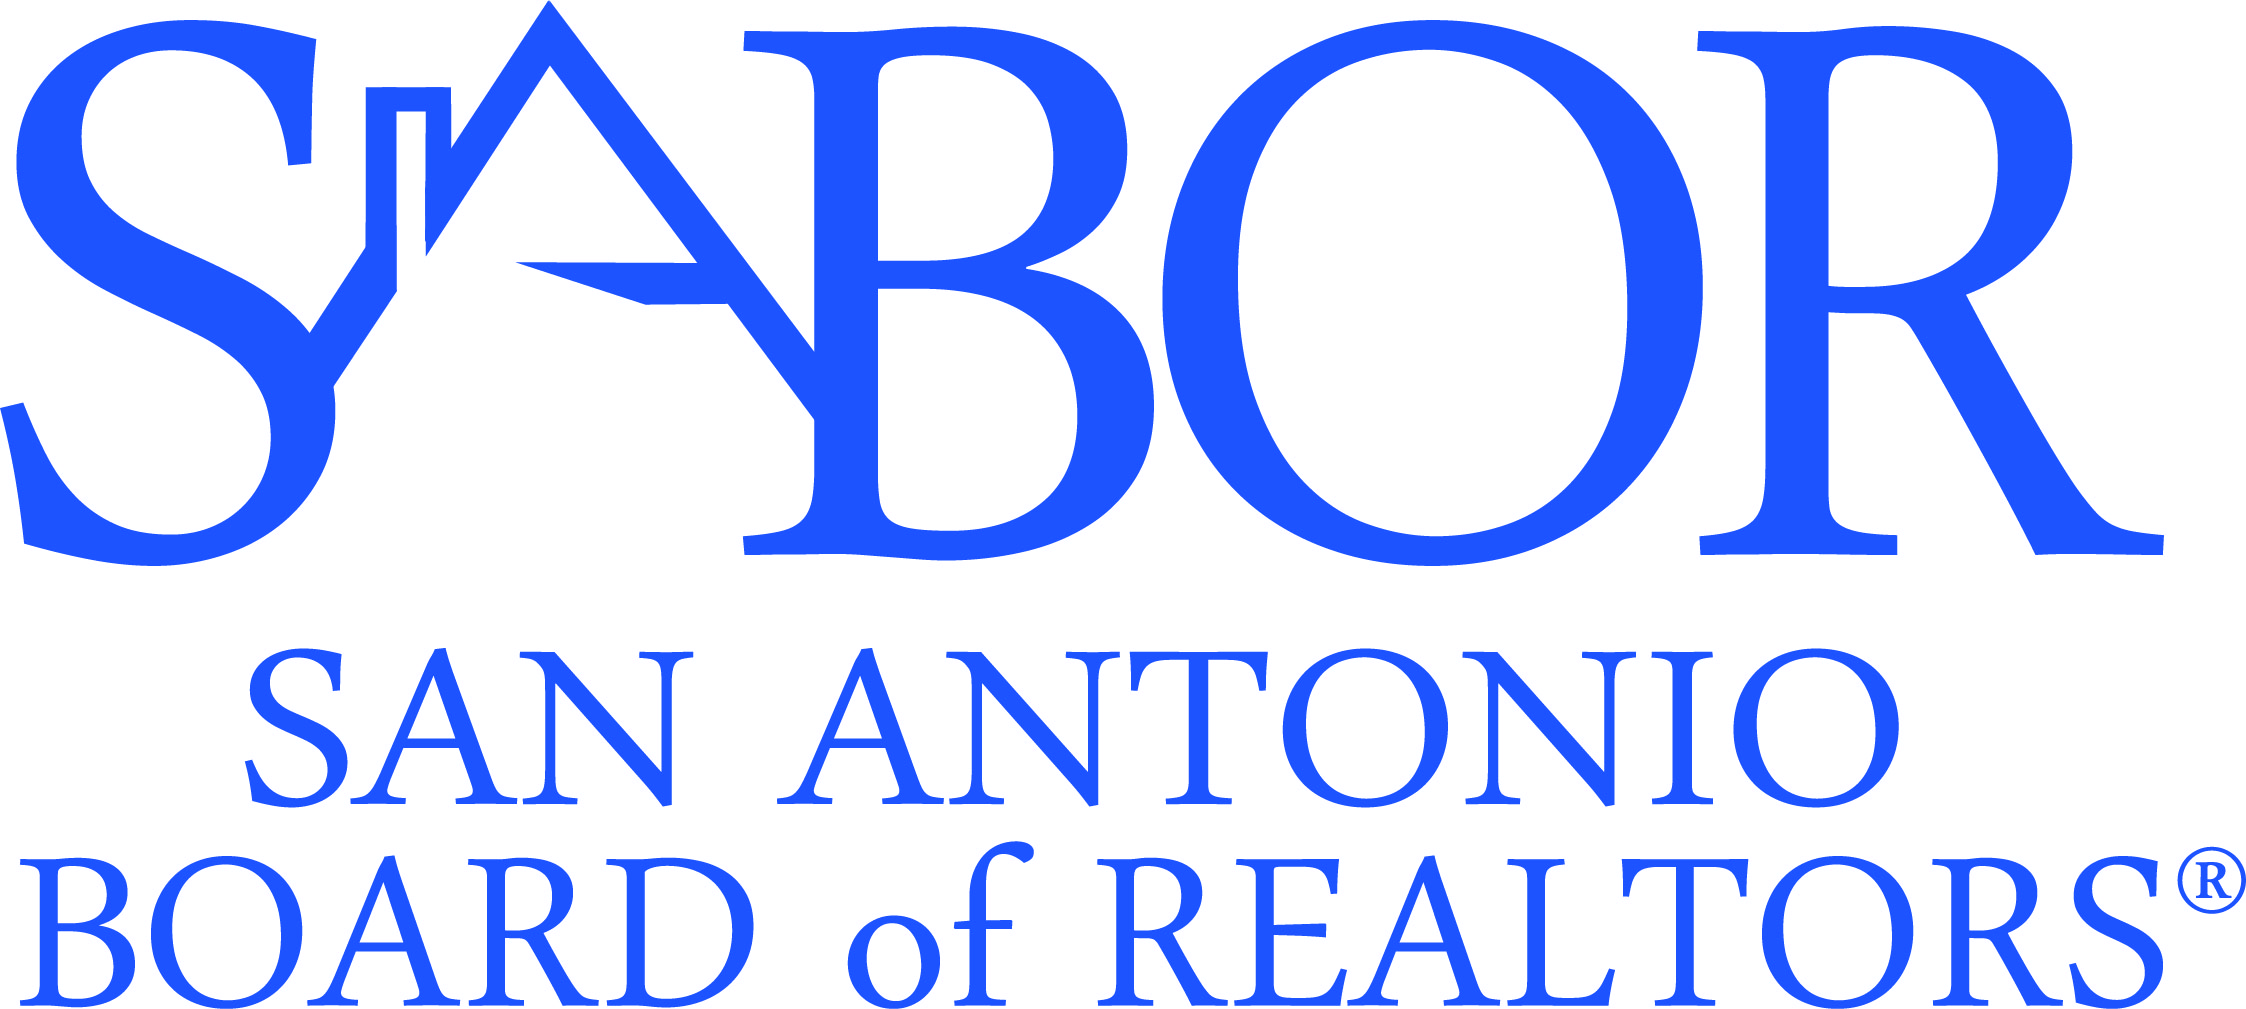 San Antonio Board of Realtors logo